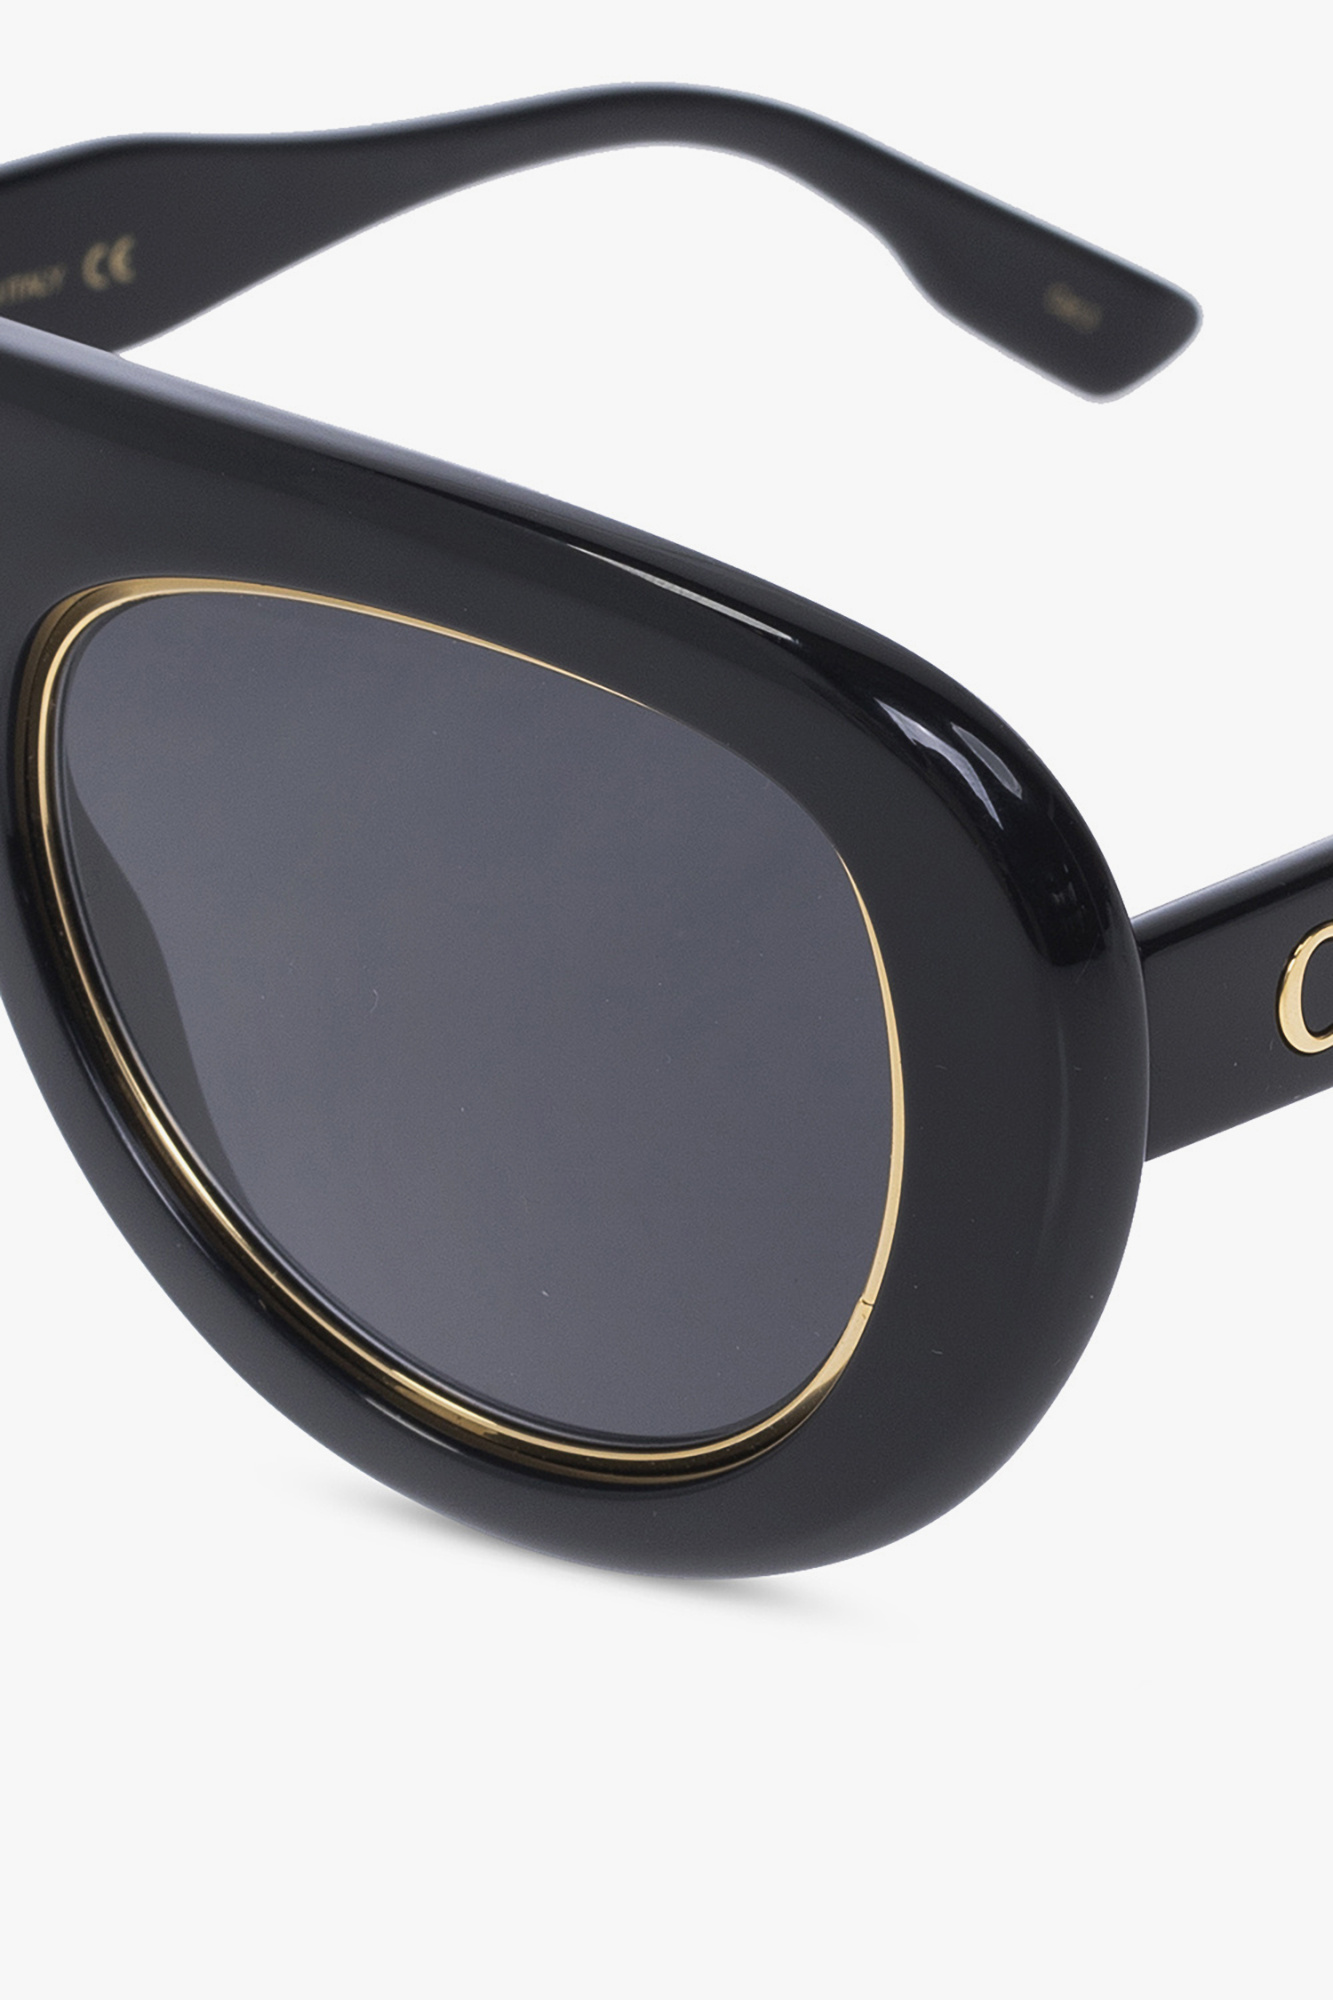 Gucci uglyworldwide jazzelle zanaughtti chrishabana glvss sunglasses collection collaboration release